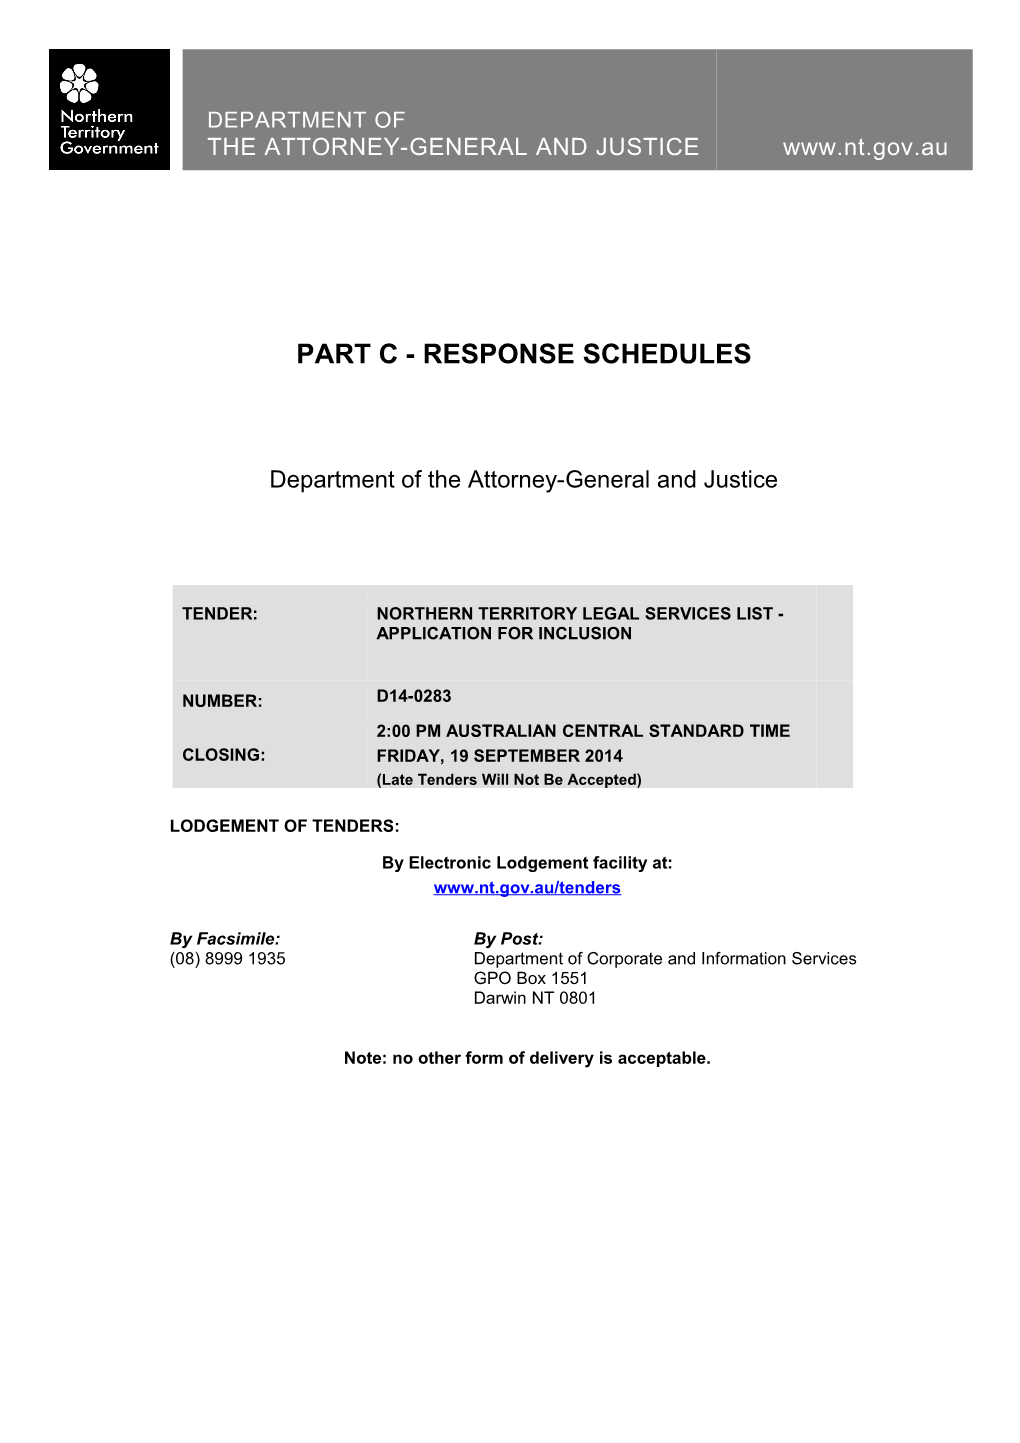 Part C - Response Schedules